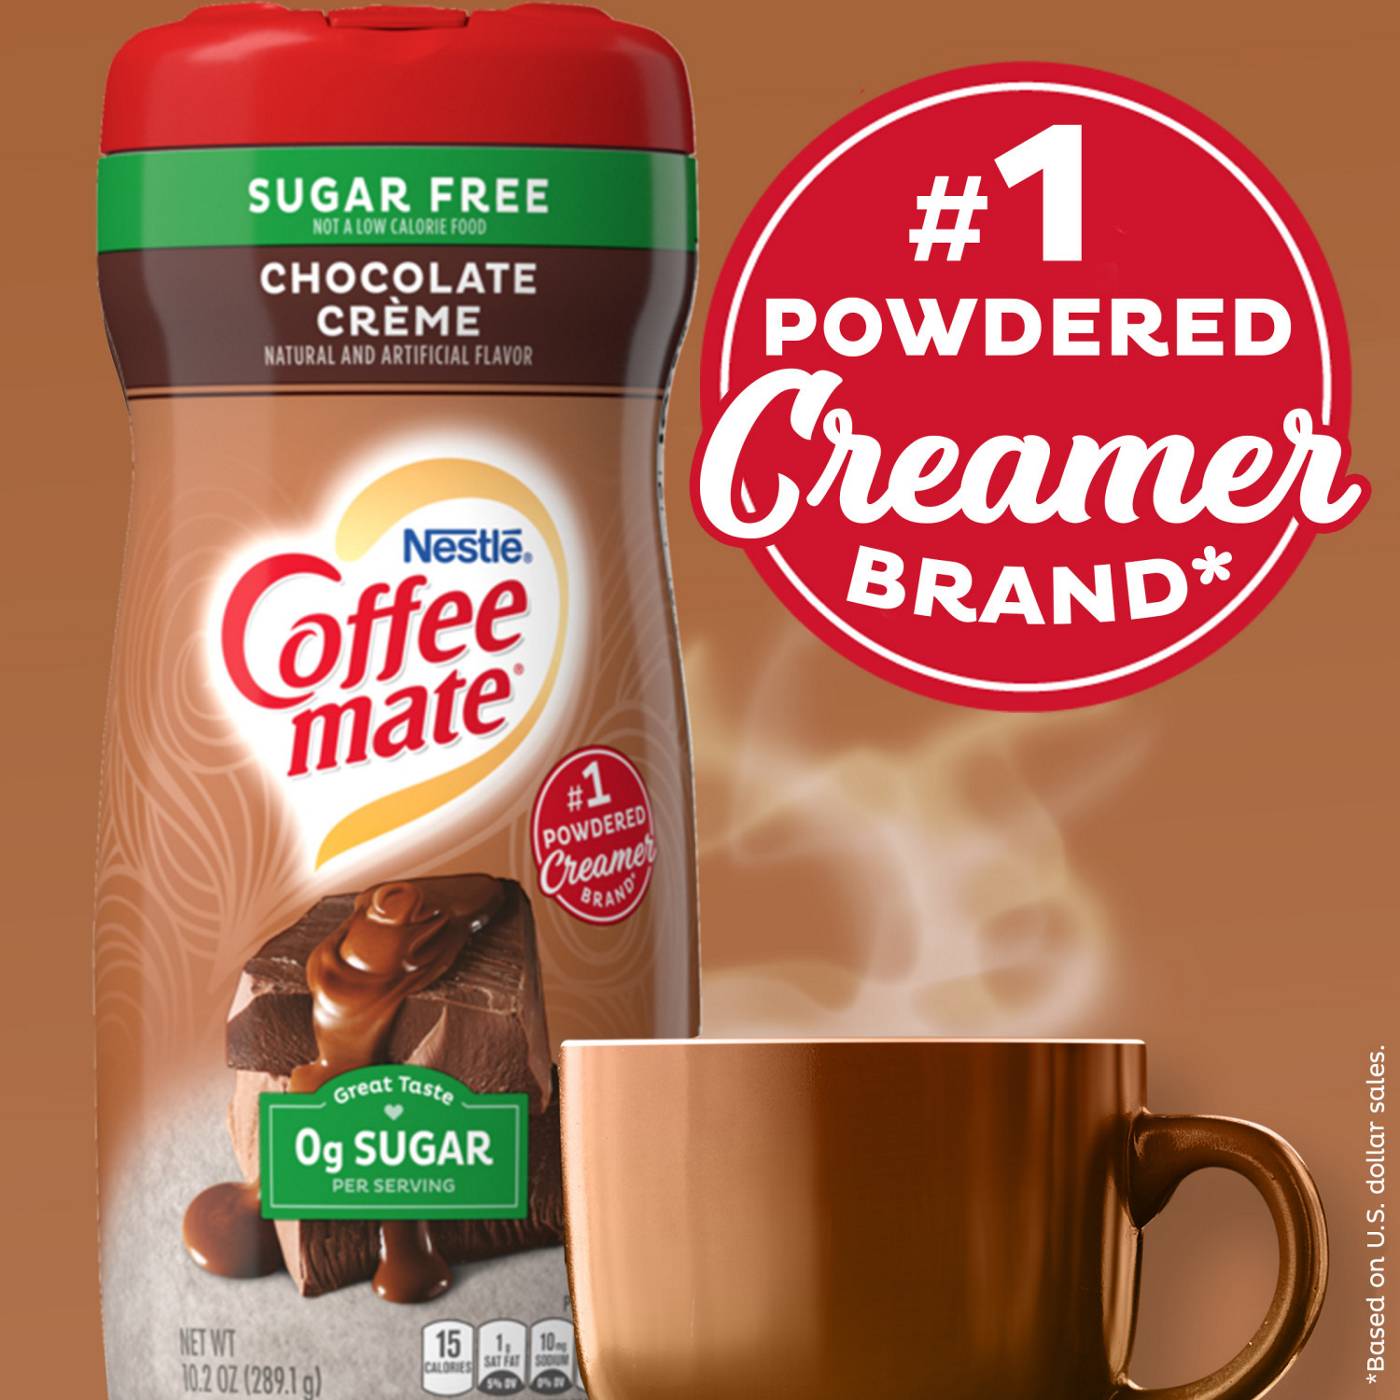 Nestle Coffee Mate Sugar Free Chocolate Creme Powder Coffee Creamer; image 2 of 8